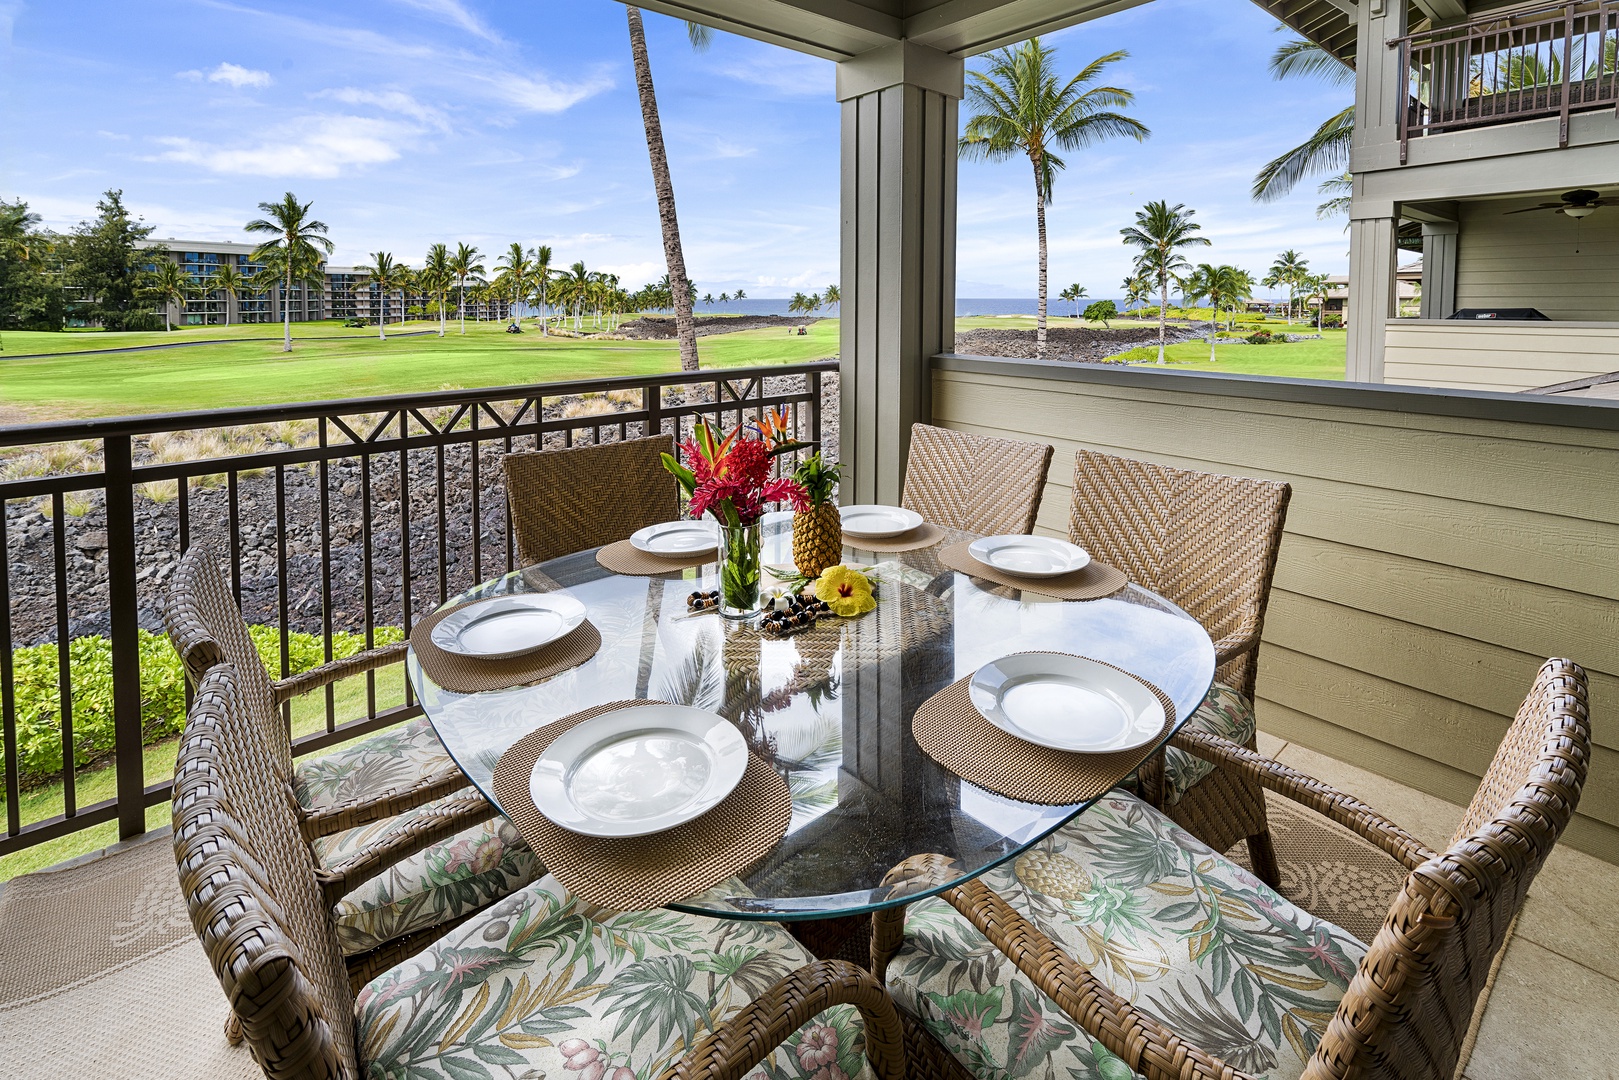 Waikoloa Vacation Rentals, Hali'i Kai at Waikoloa Beach Resort 9F - Enjoy a lunch outside overlooking the Golf players